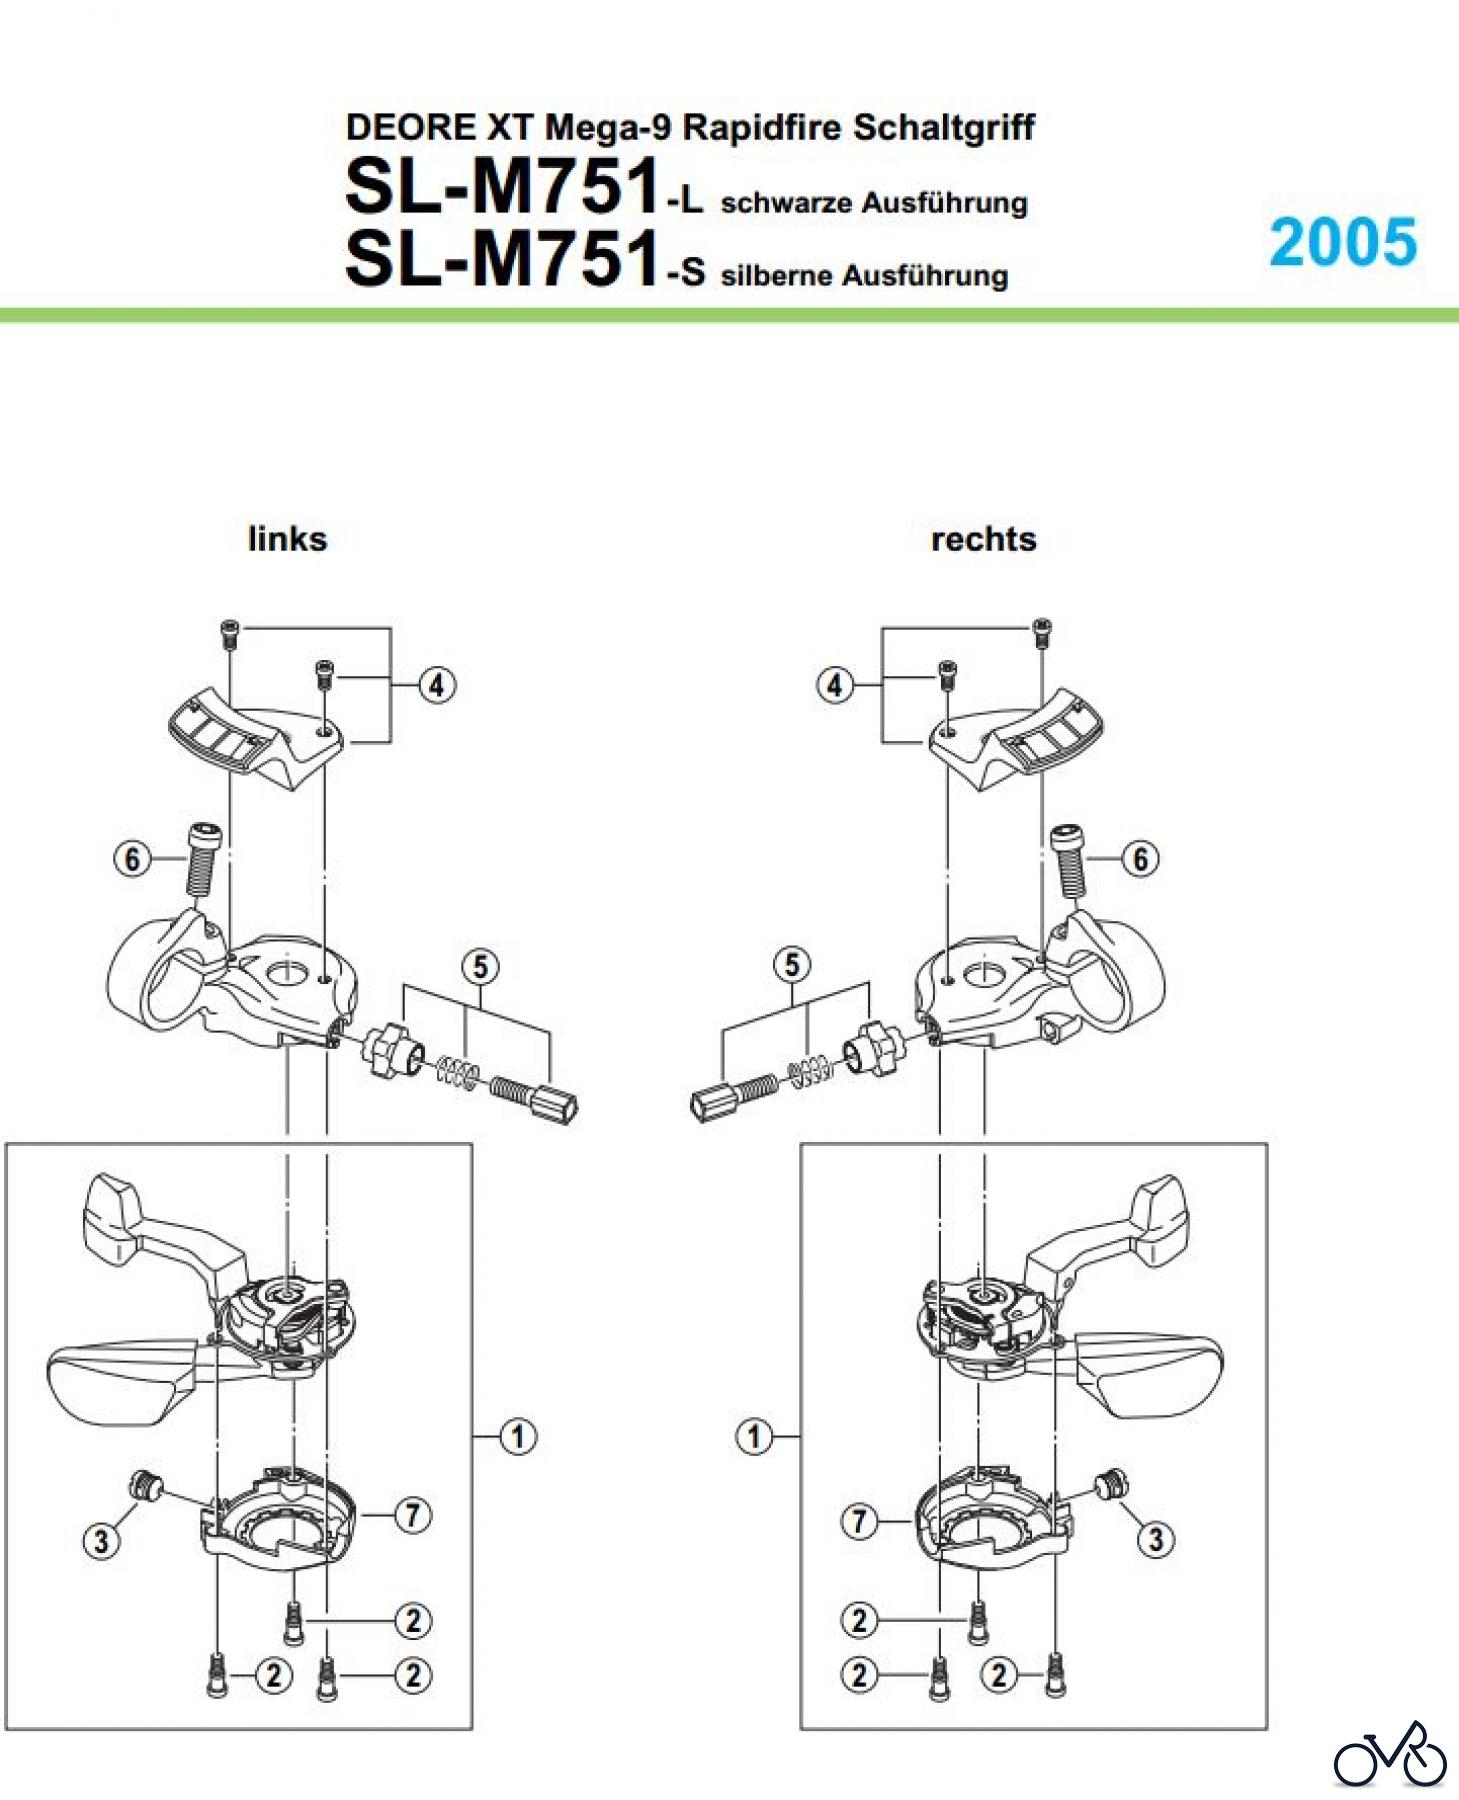  Shimano SL Shift Lever - Schalthebel SL-M751 DEORE XT Mega-9 Rapidfire Schaltgriff , 2005